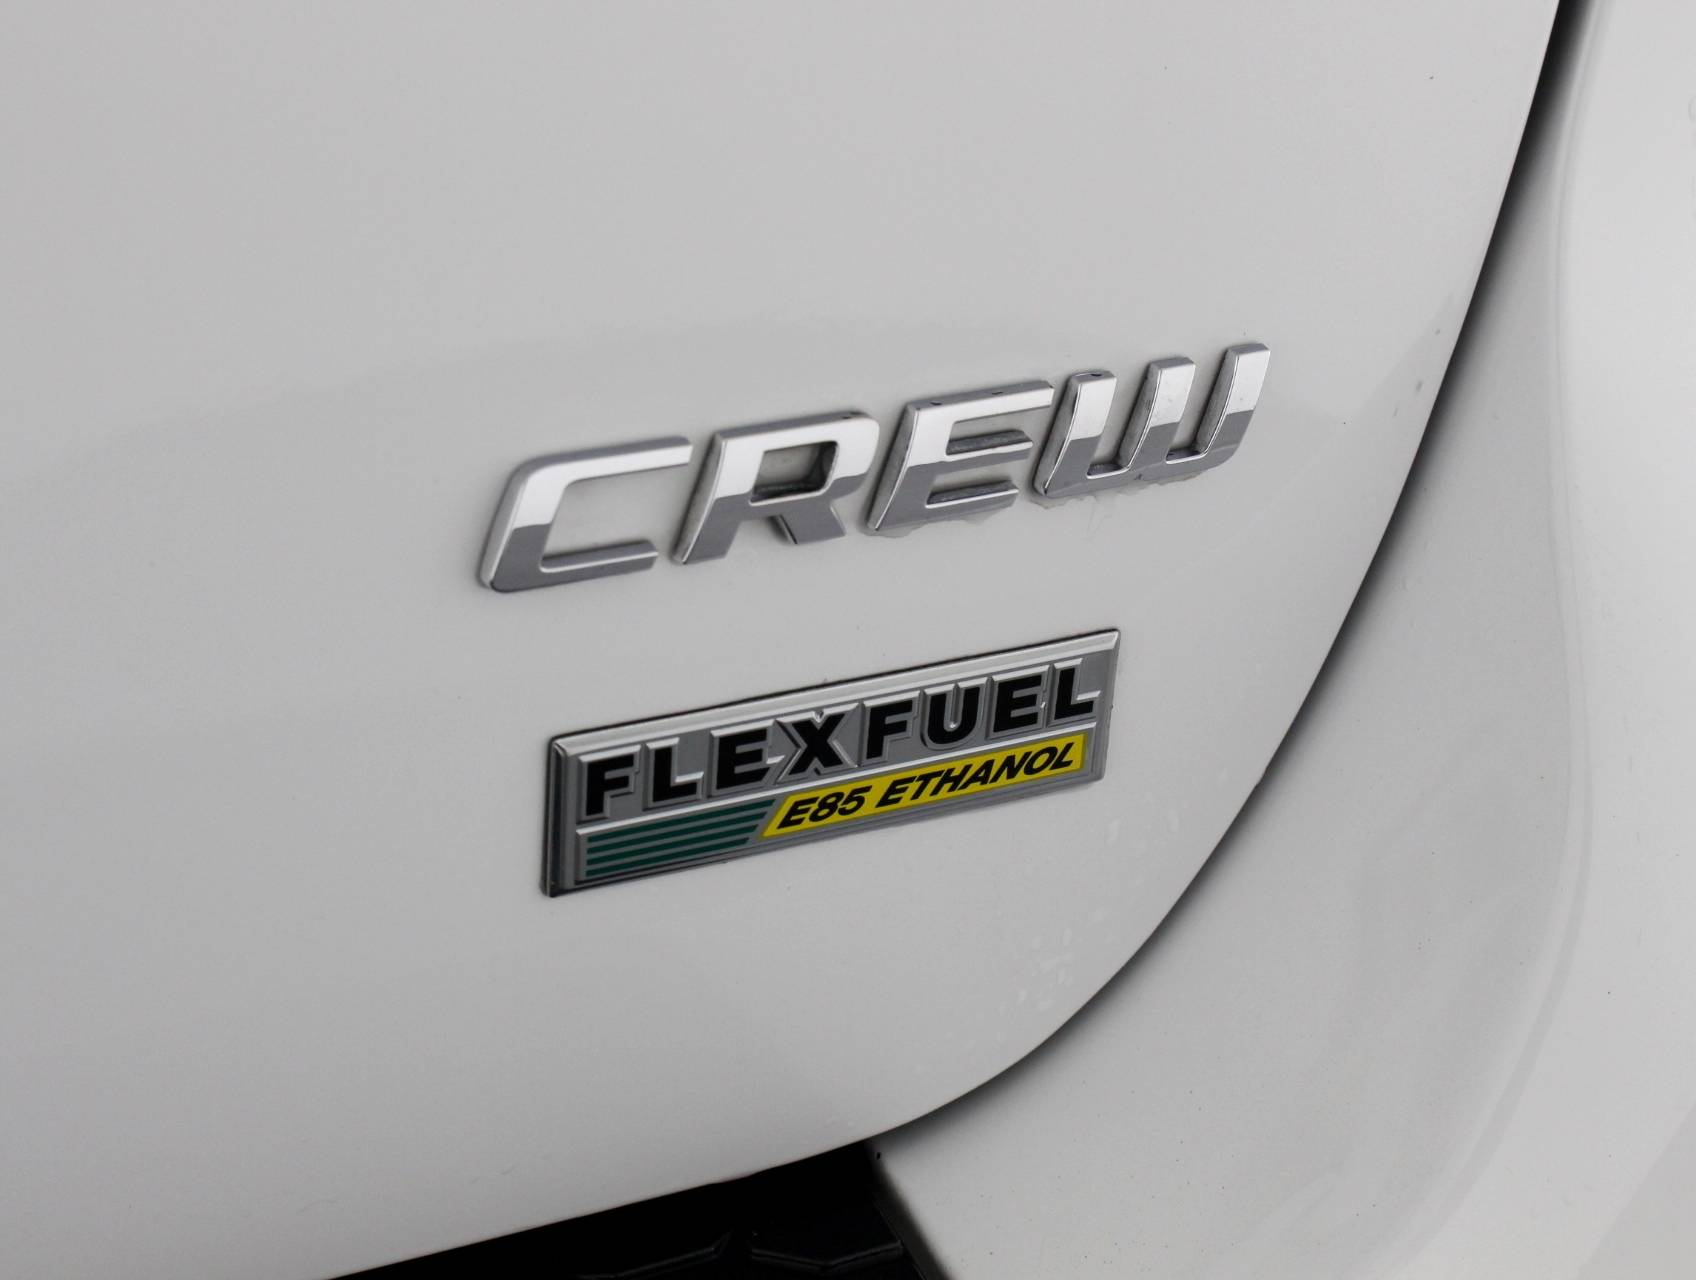 Florida Fine Cars - Used DODGE DURANGO 2013 HOLLYWOOD CREW AWD